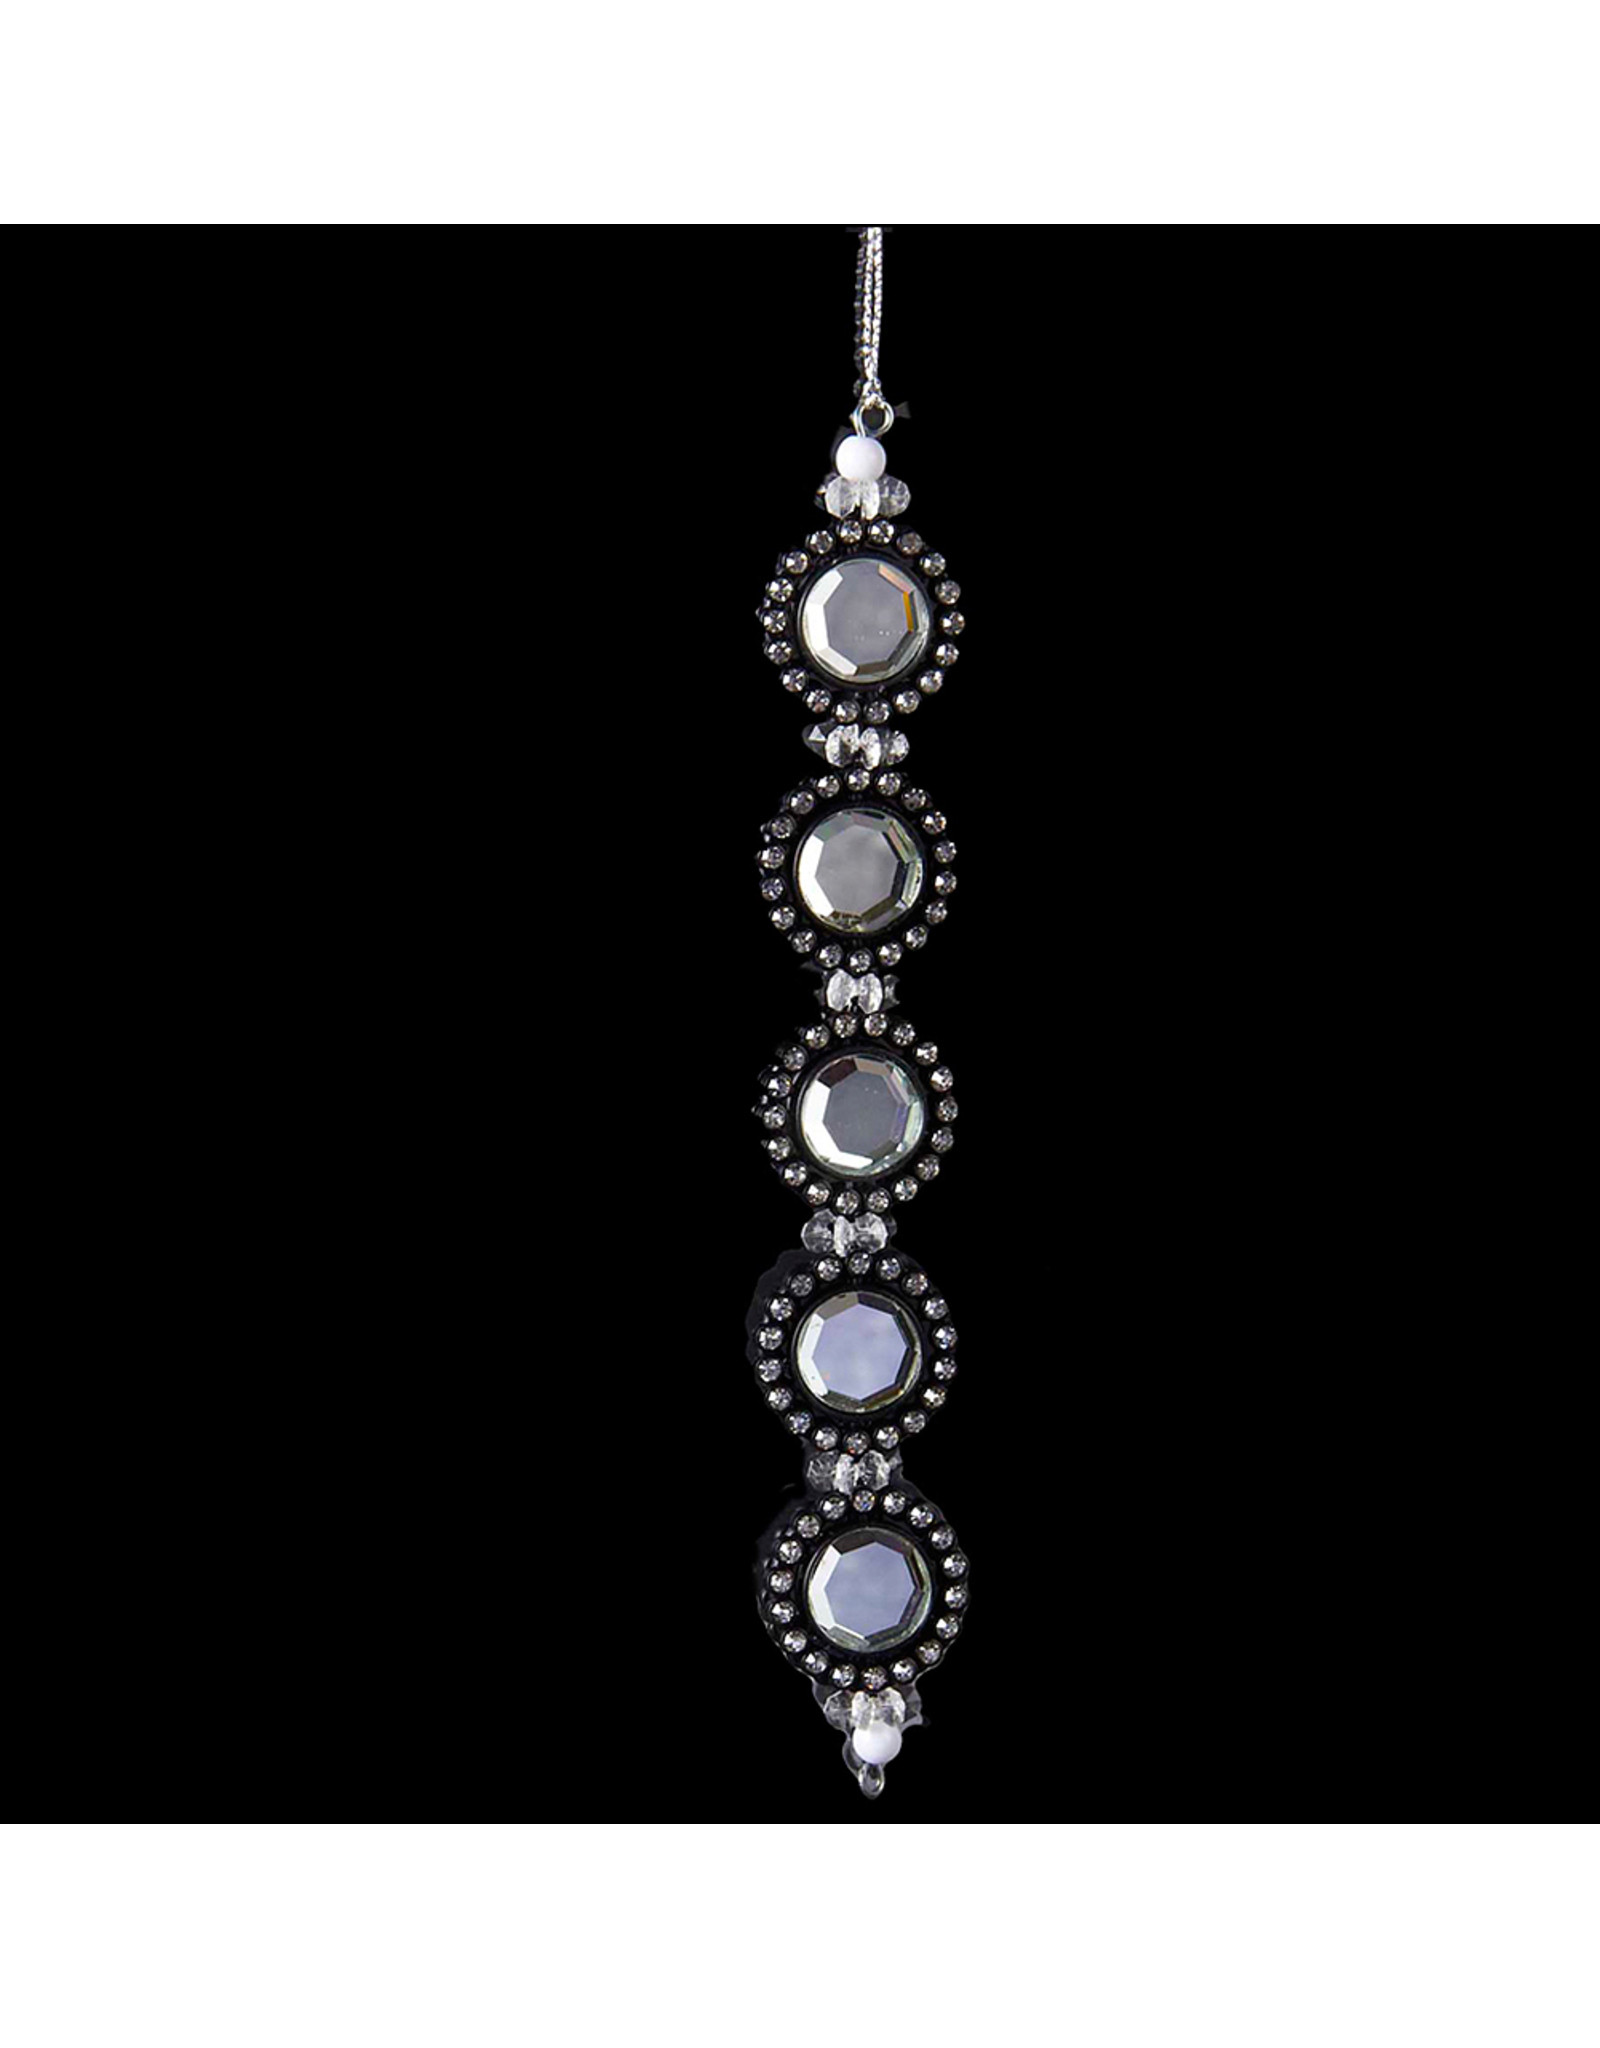 Kurt Adler Black and Silver Gemstone Ornament Round -C